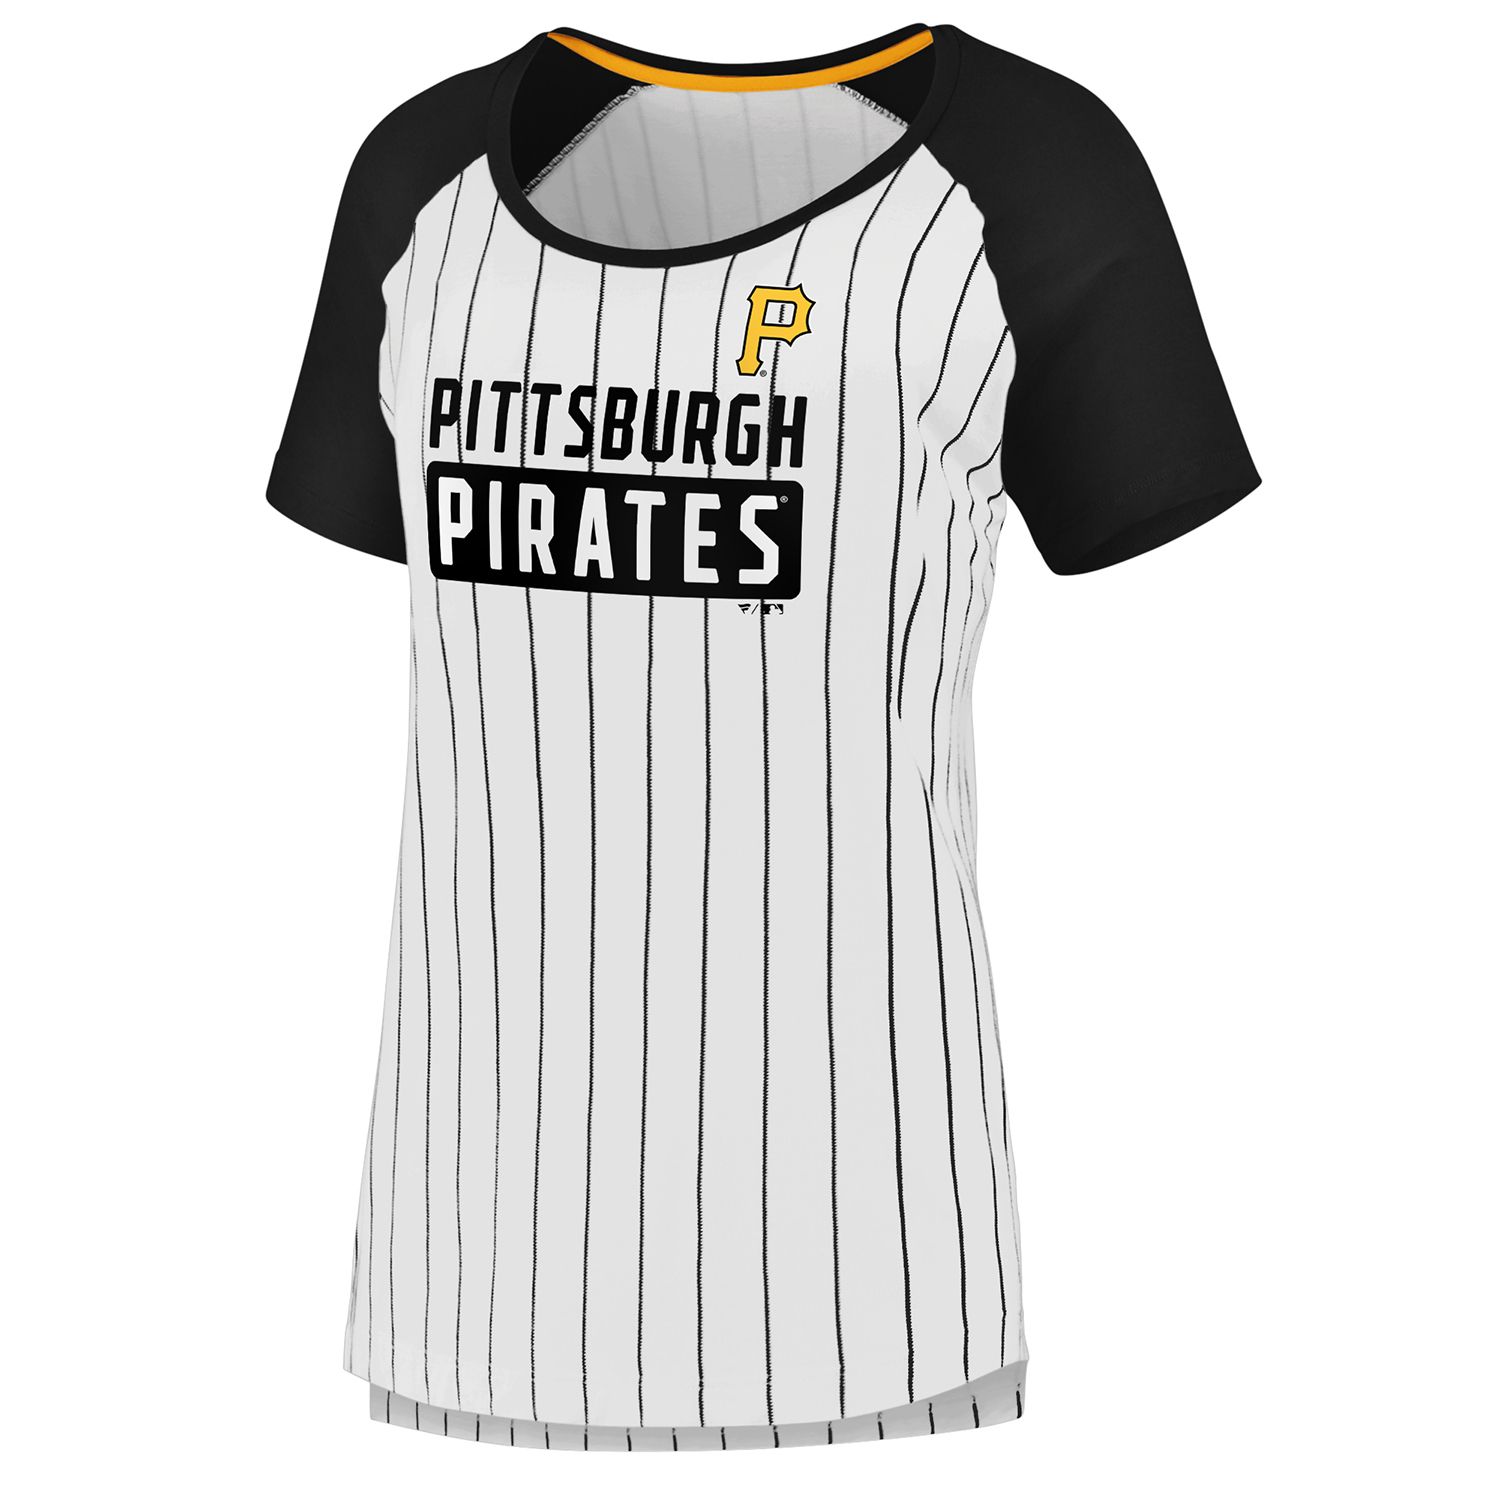 pirates pinstripe jersey